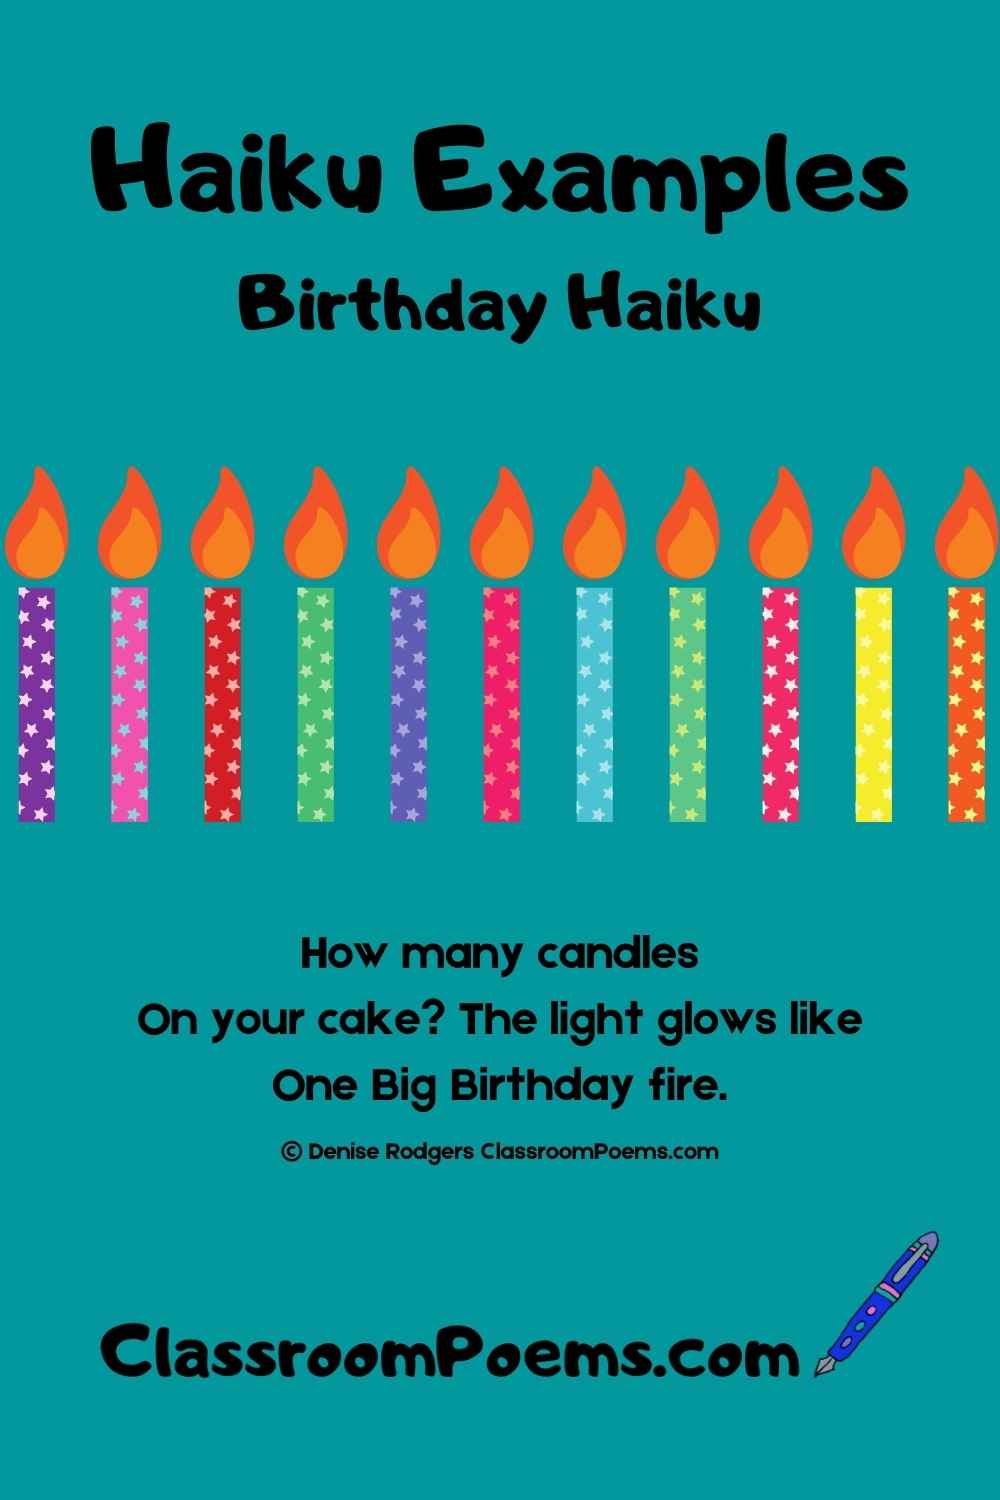 Birthday Haiku by Denise Rodgers on ClassroomPoems.com.